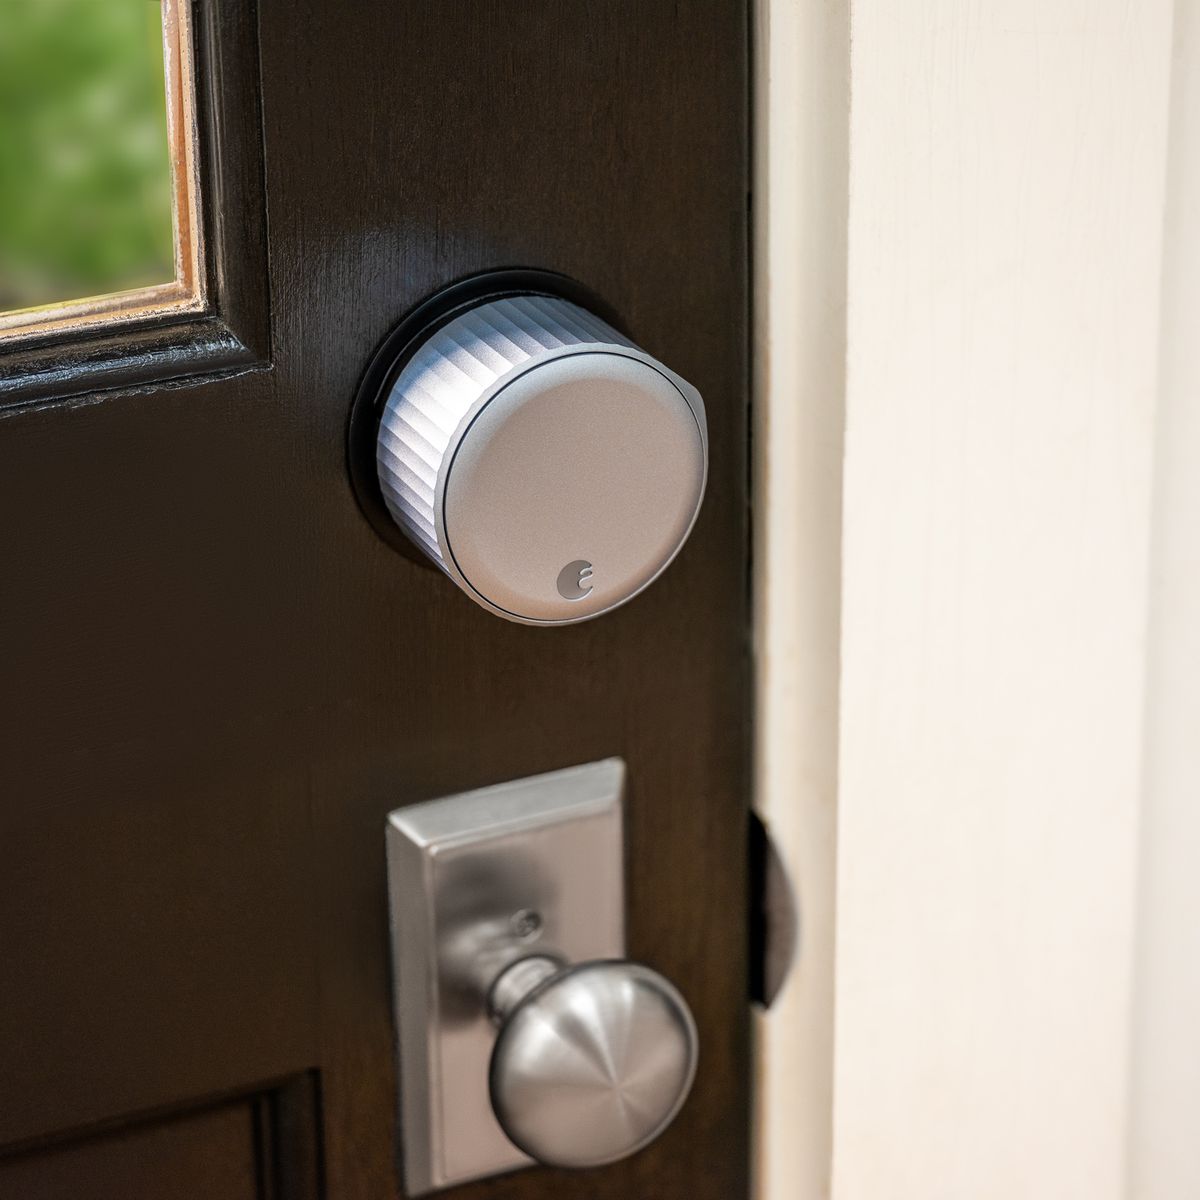 August Wi-Fi Smart Lock installed on the brown door